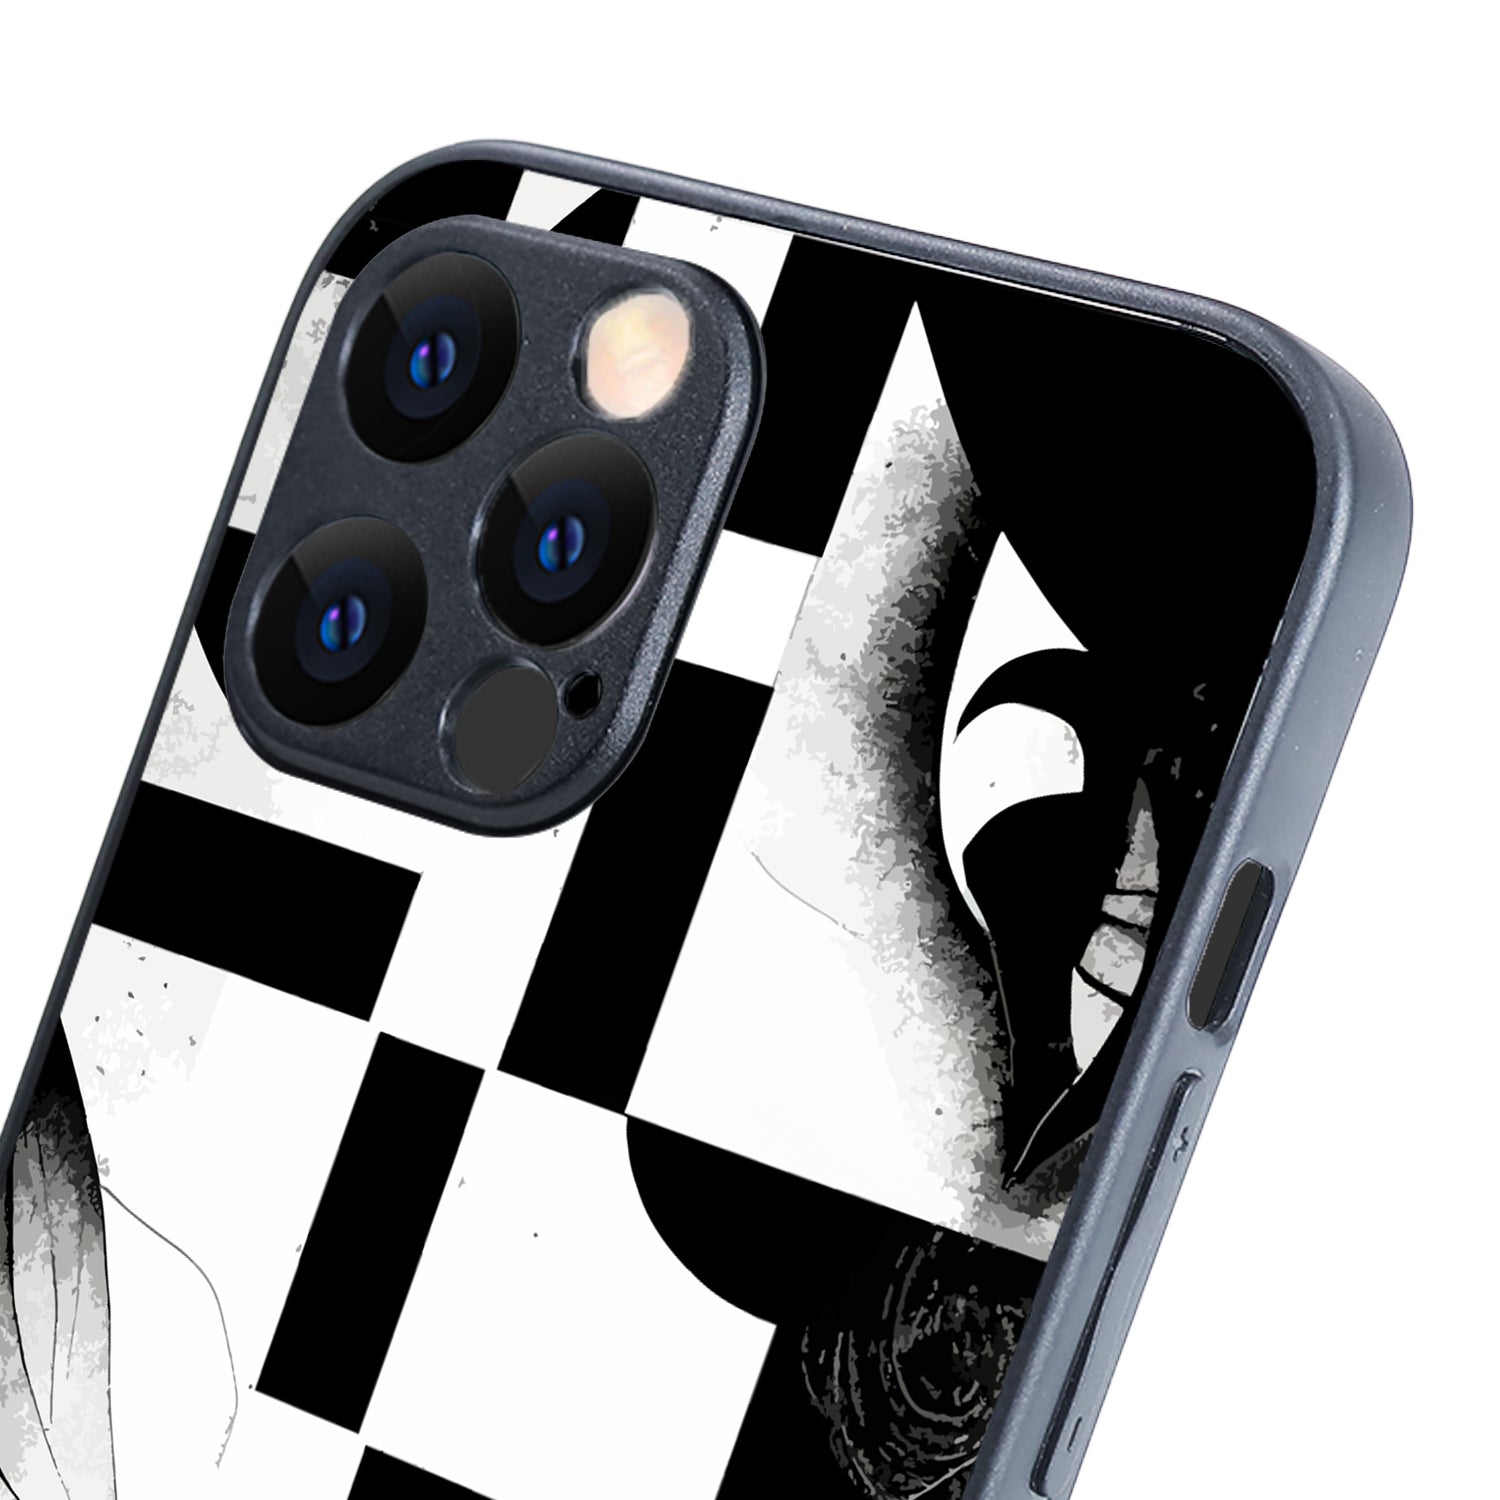 Aesthetic Optical Illusion iPhone 12 Pro Max Case